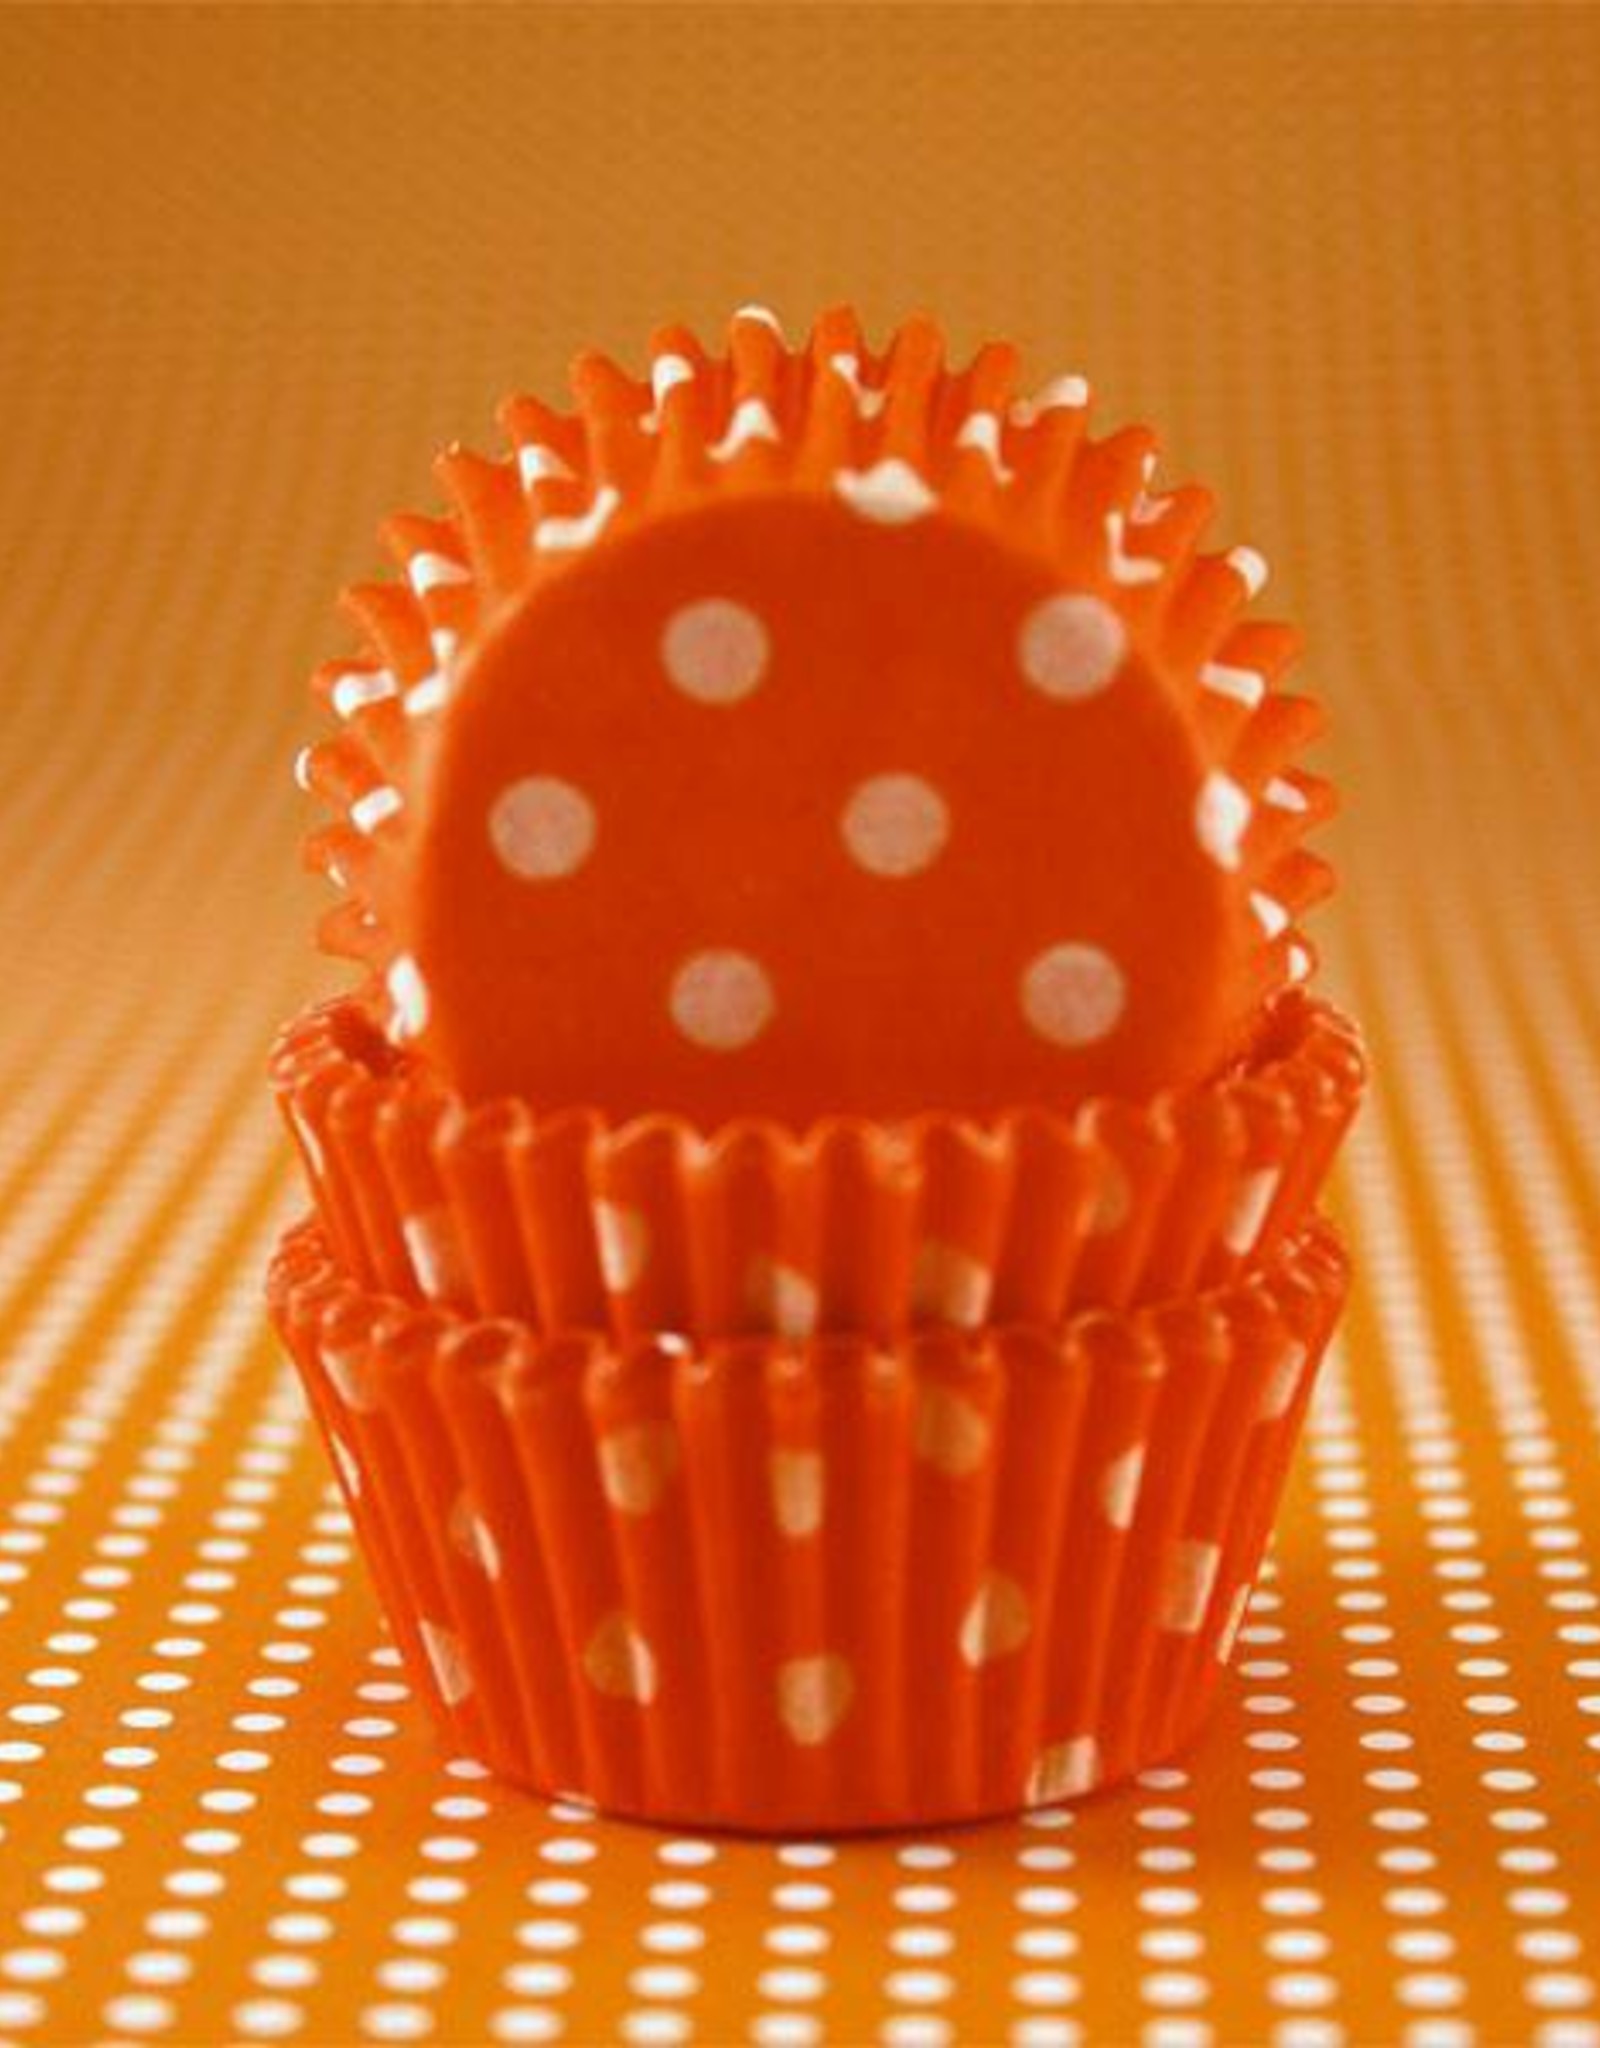 Orange Polka Dot Baking Cups Mini (40-50ct)